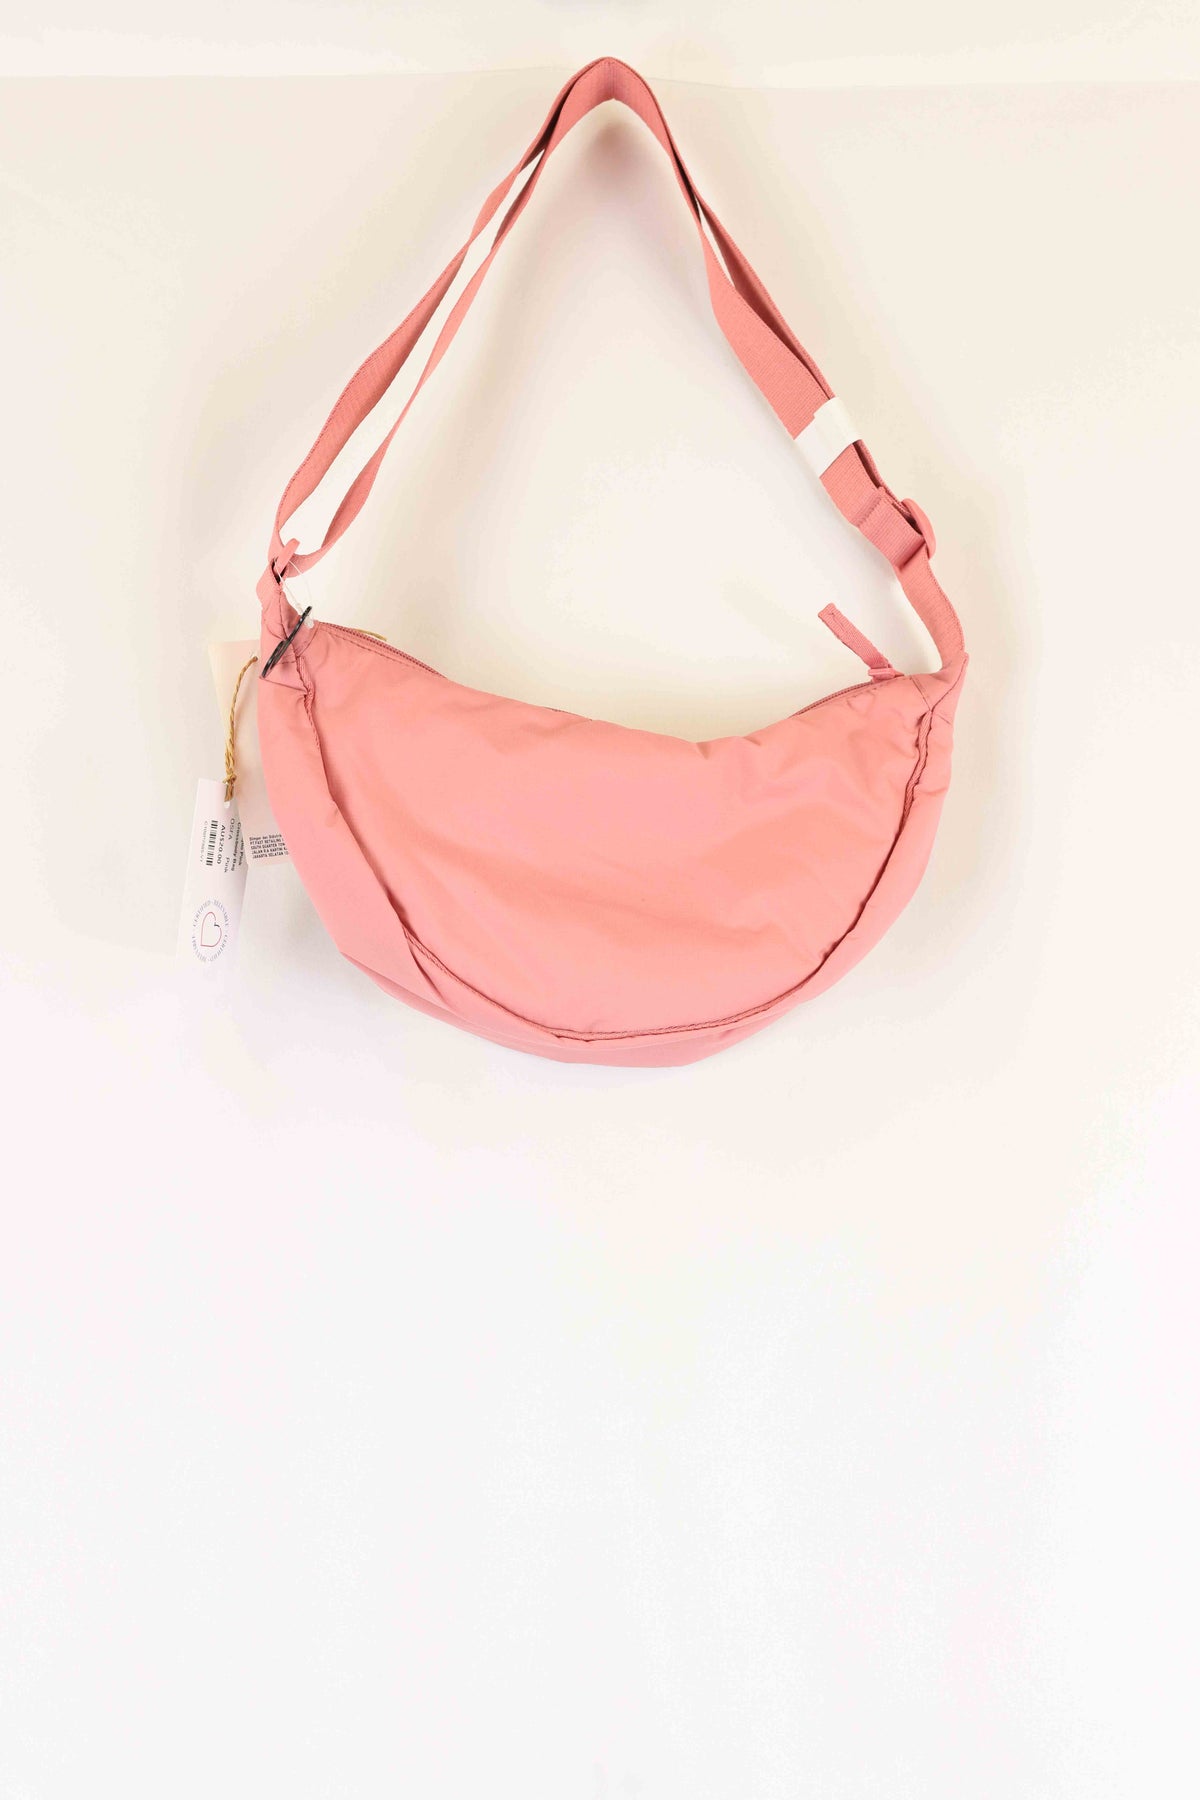 Uniqlo Pink Crossbody Bag